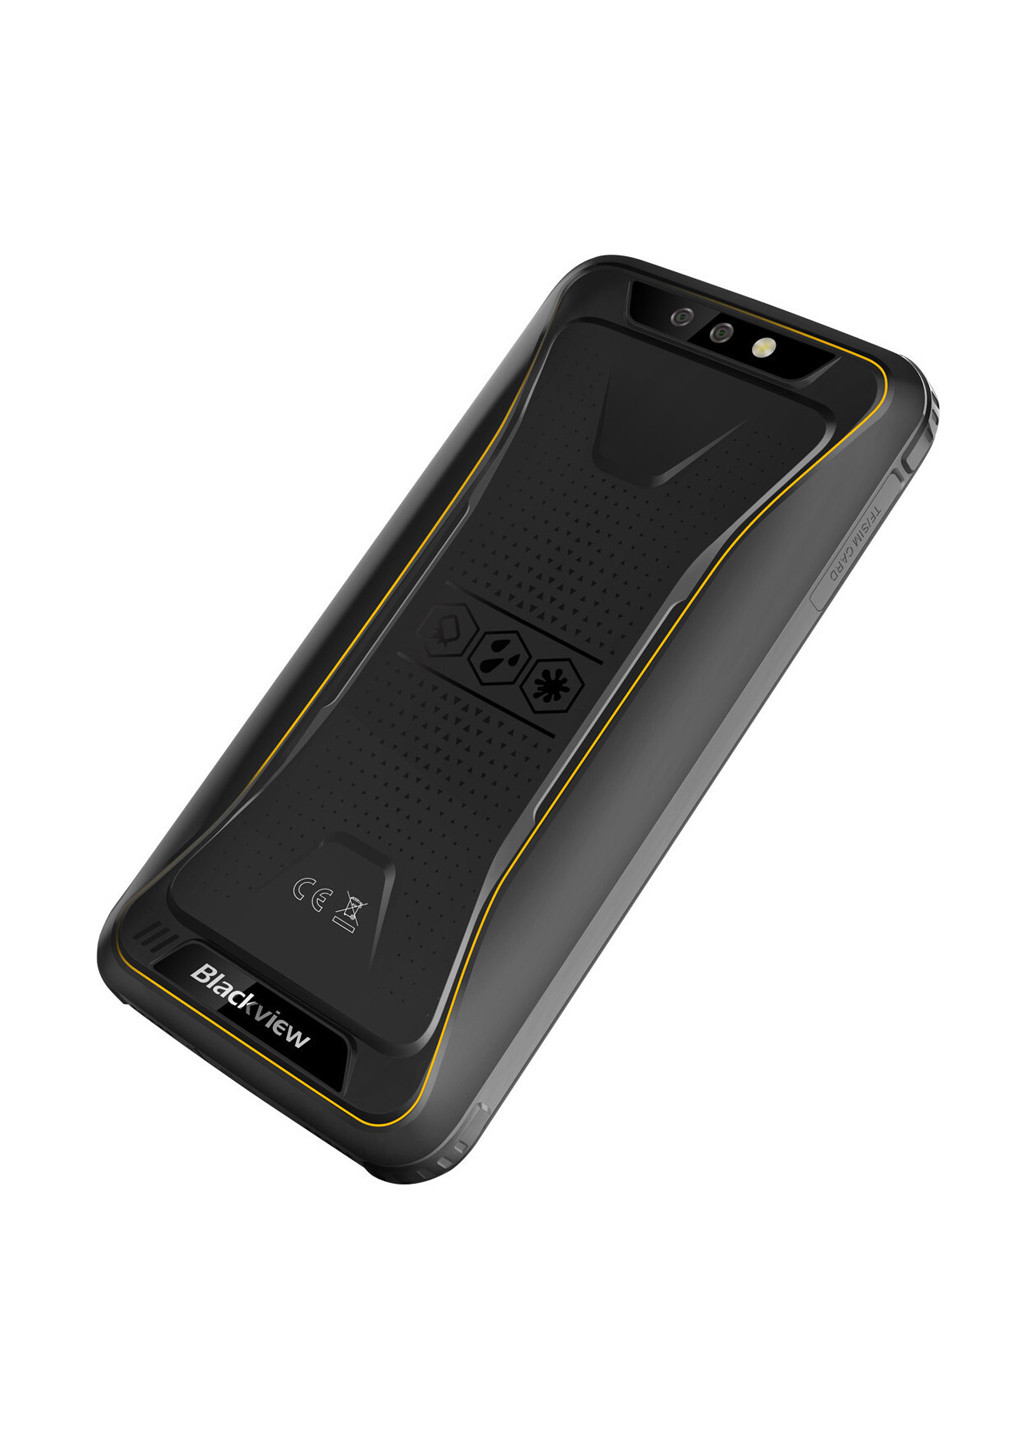 Смартфон BV5500 Pro 3 / 16GB Yellow Blackview bv5500 pro 3/16gb yellow (165147917)